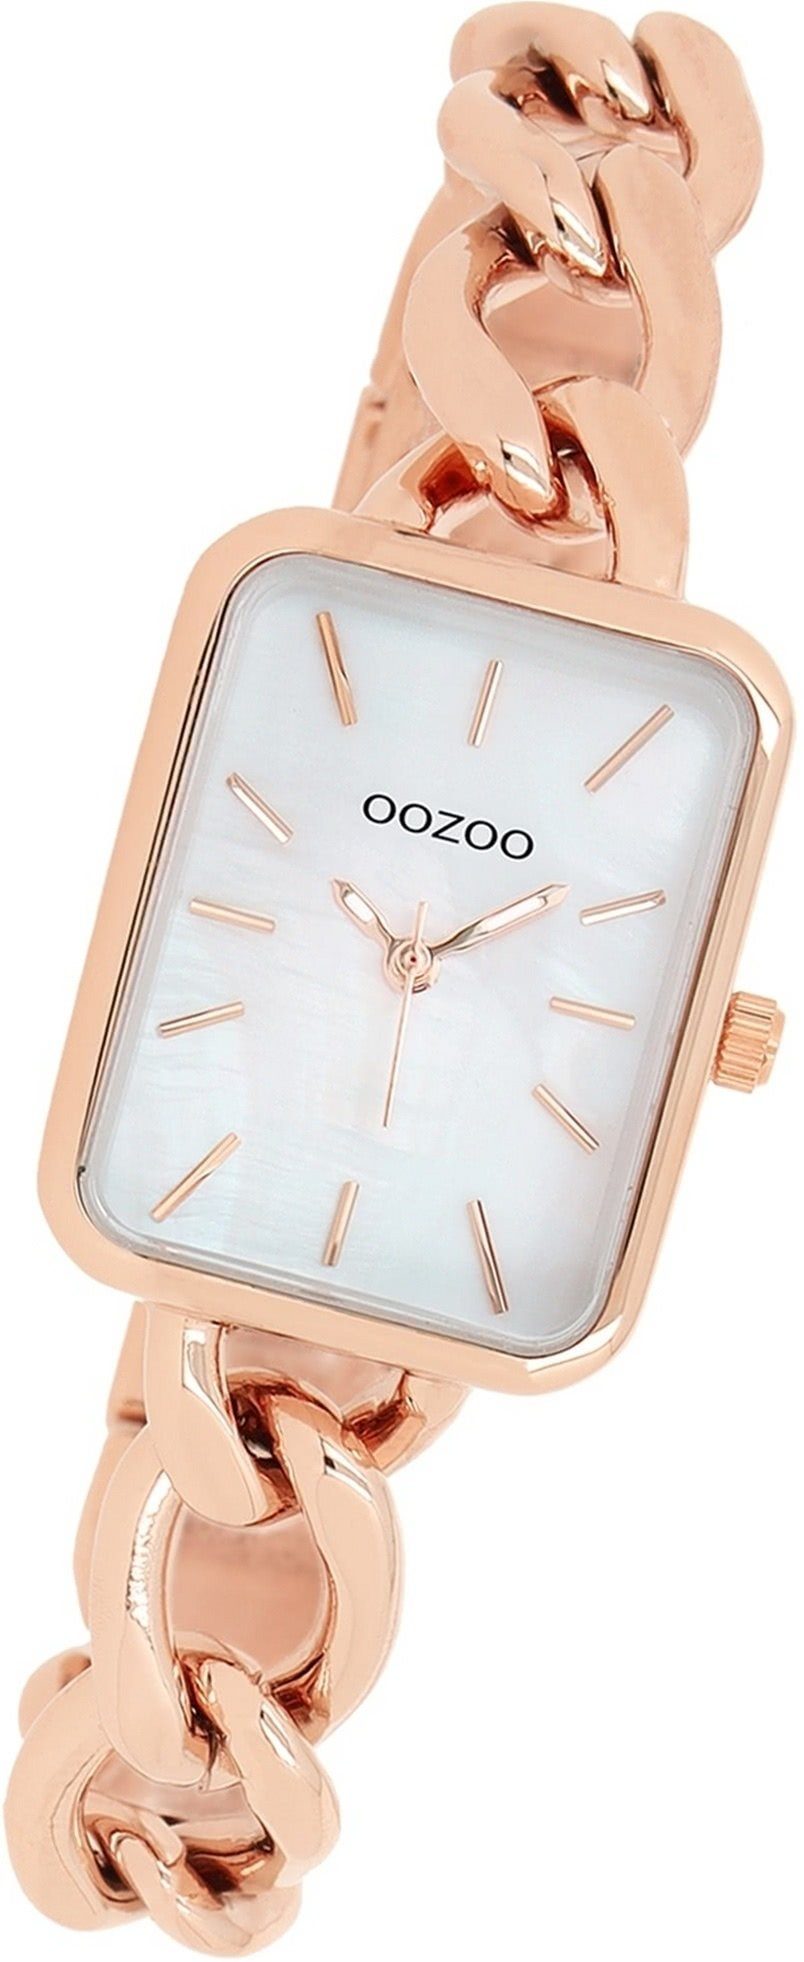 OOZOO Edelstahlarmband rosegold, Oozoo Damenuhr Quarzuhr 2,5x28,5mm Timepieces, Gehäuse, Damen rechteckiges Armbanduhr